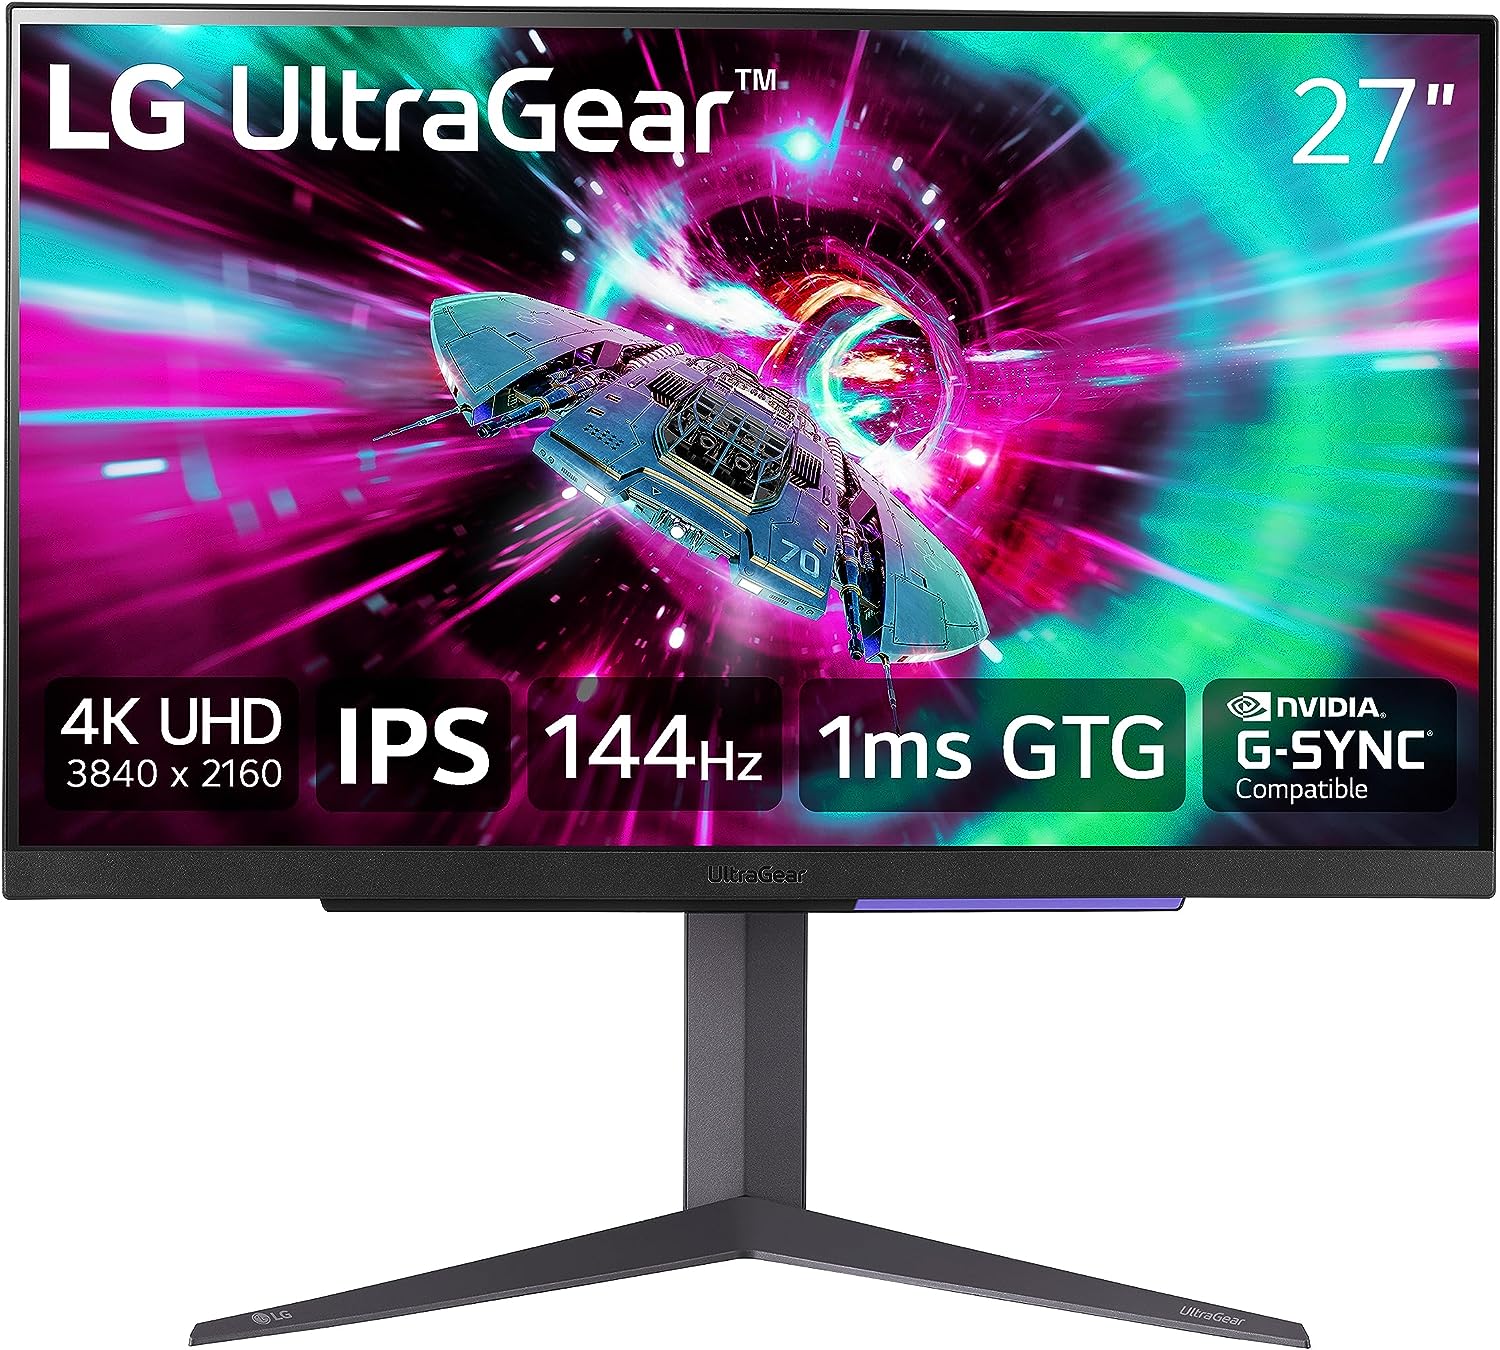 LG 27 UltraGear 4K UHD 3840x2160 Gaming Monitor 144Hz 1 - Alaska - Anchorage ID1547276